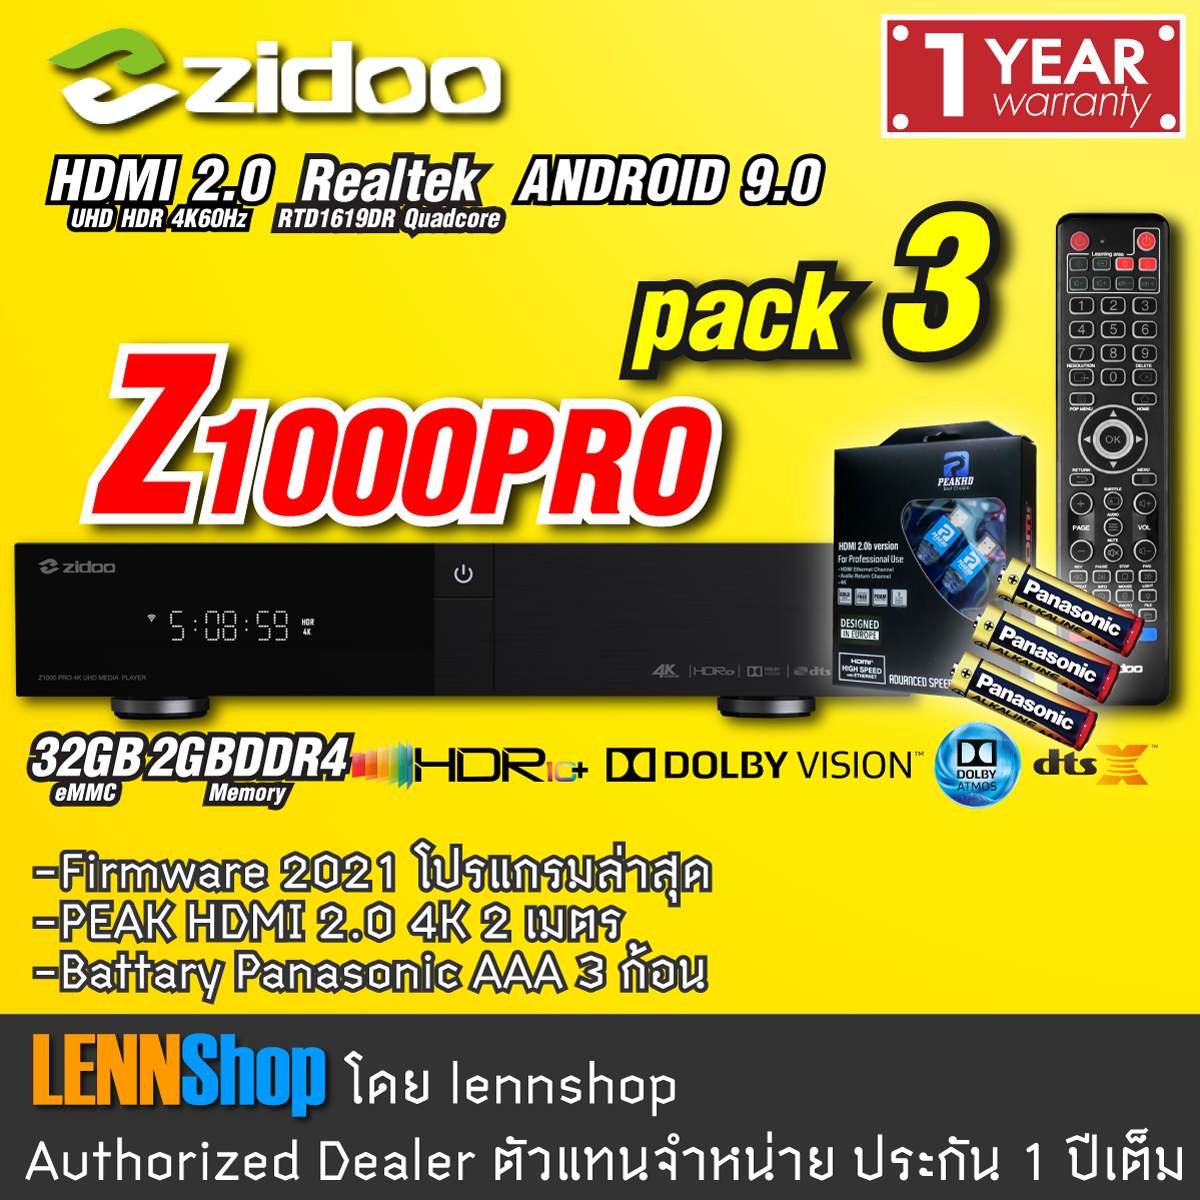 ZiDOO : Z1000PRO 2GB DDR4 , 32GB eMMC , Realtek1619DR hexa-core 64bit รุ่นใหม่ 2020 Dolby Vision , HDR10+ , Dolby Atmos , DtsX ประกันศูนย์ 1 ปี ตัวแทนไทย จัดจำหน่ายโดย LENNSHOP PACK 3